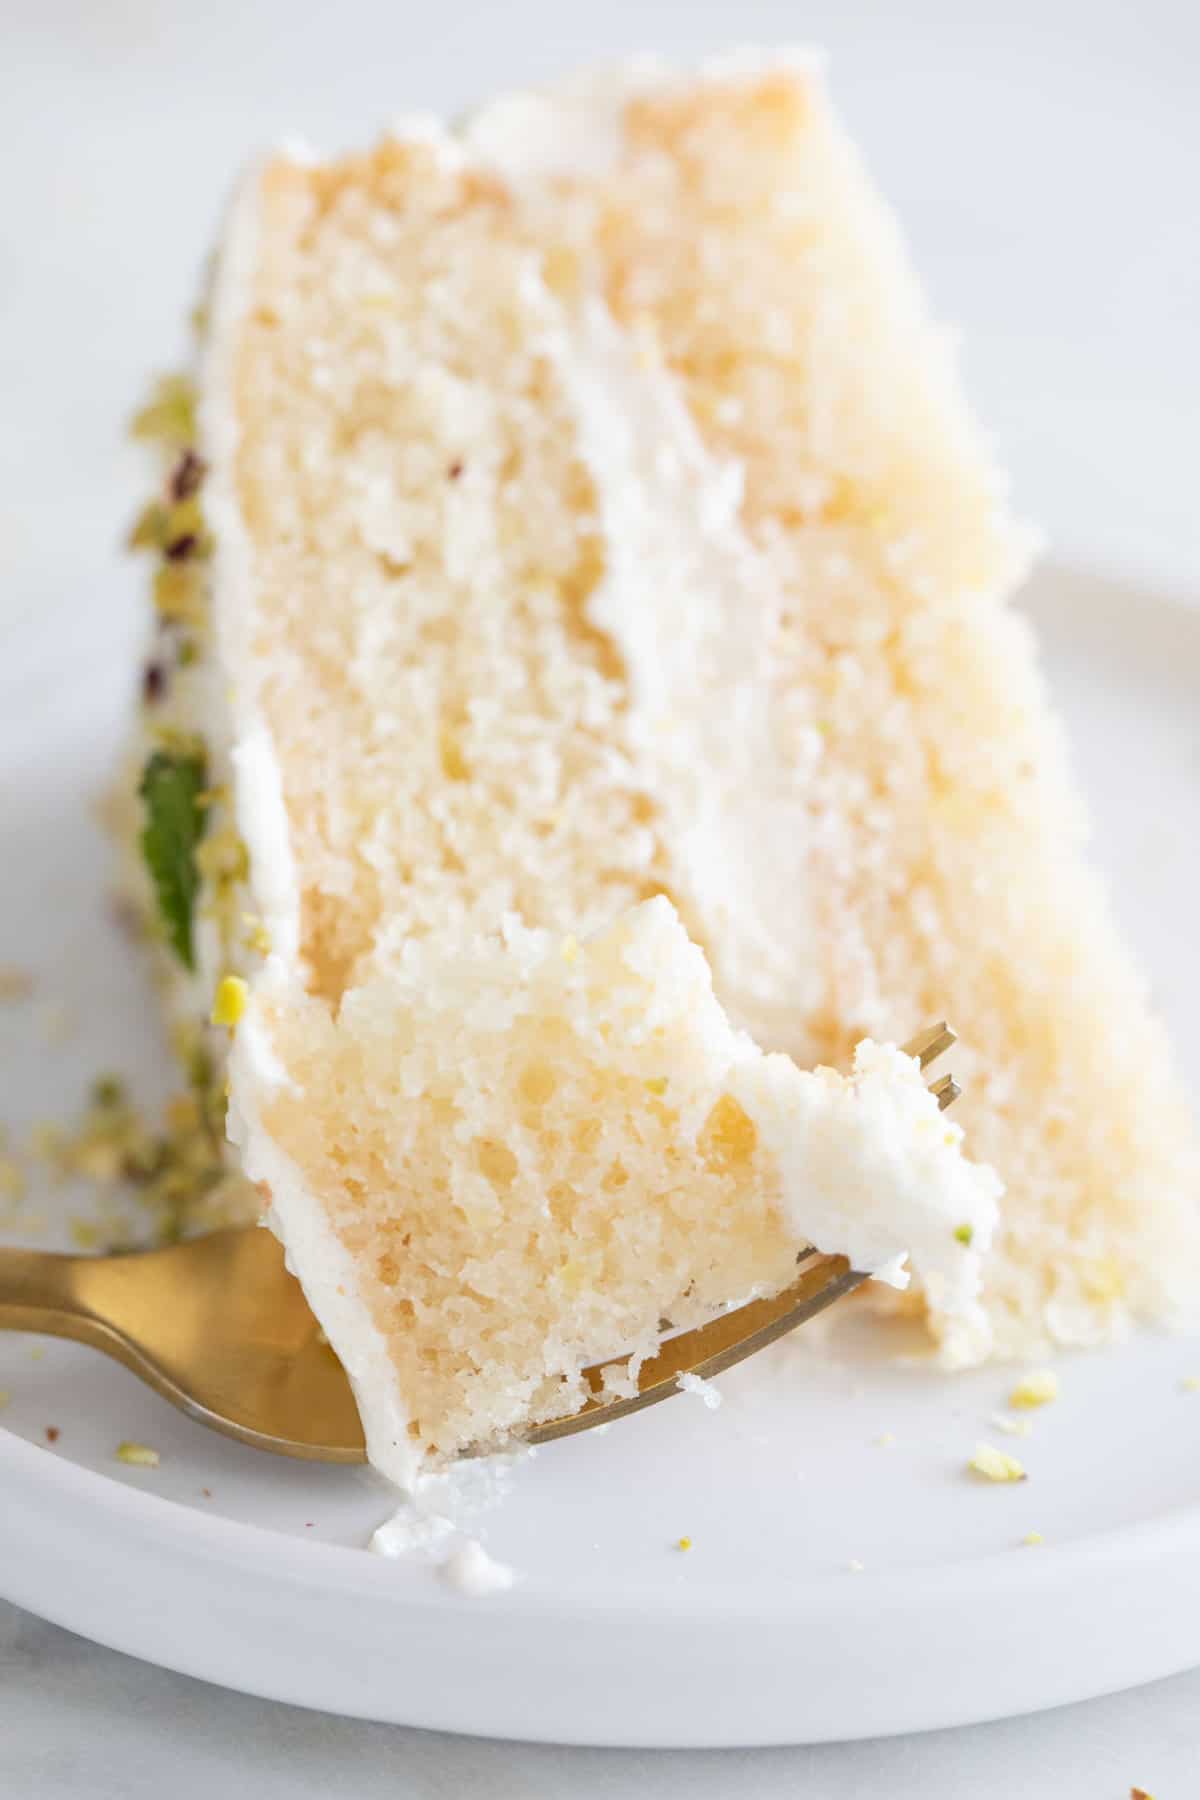 Foto de cerca de un trozo de tarta sobre un plato con un tenedor.